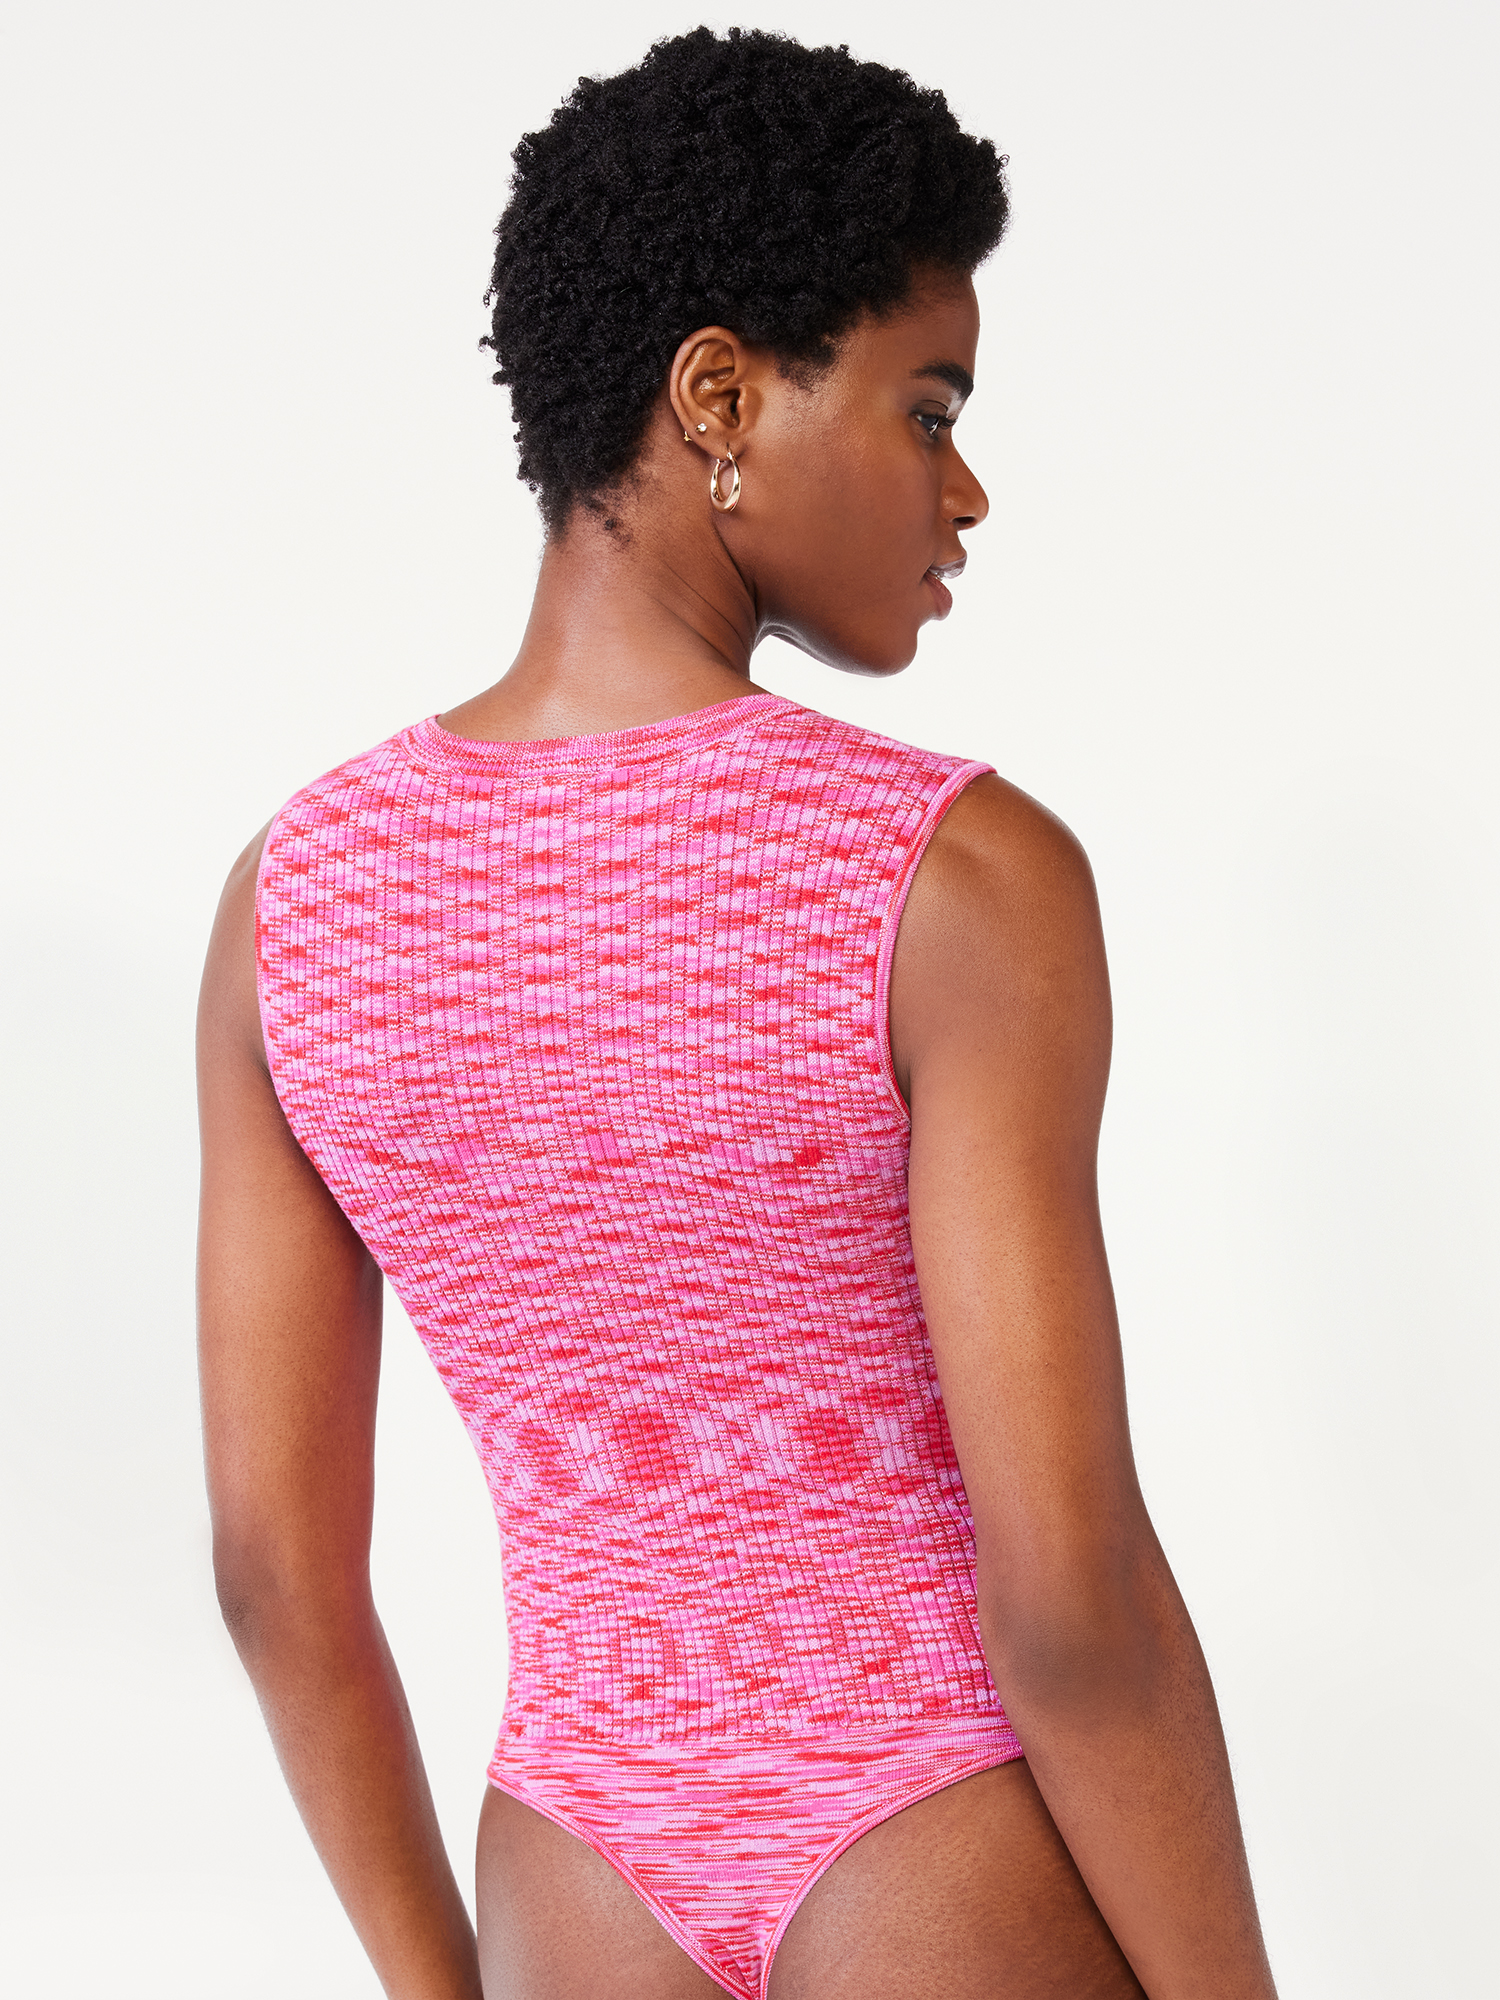 Scoop Women's Sleeveless Ribbed Space Dye Bodysuit, Sizes XS-2X - image 3 of 5